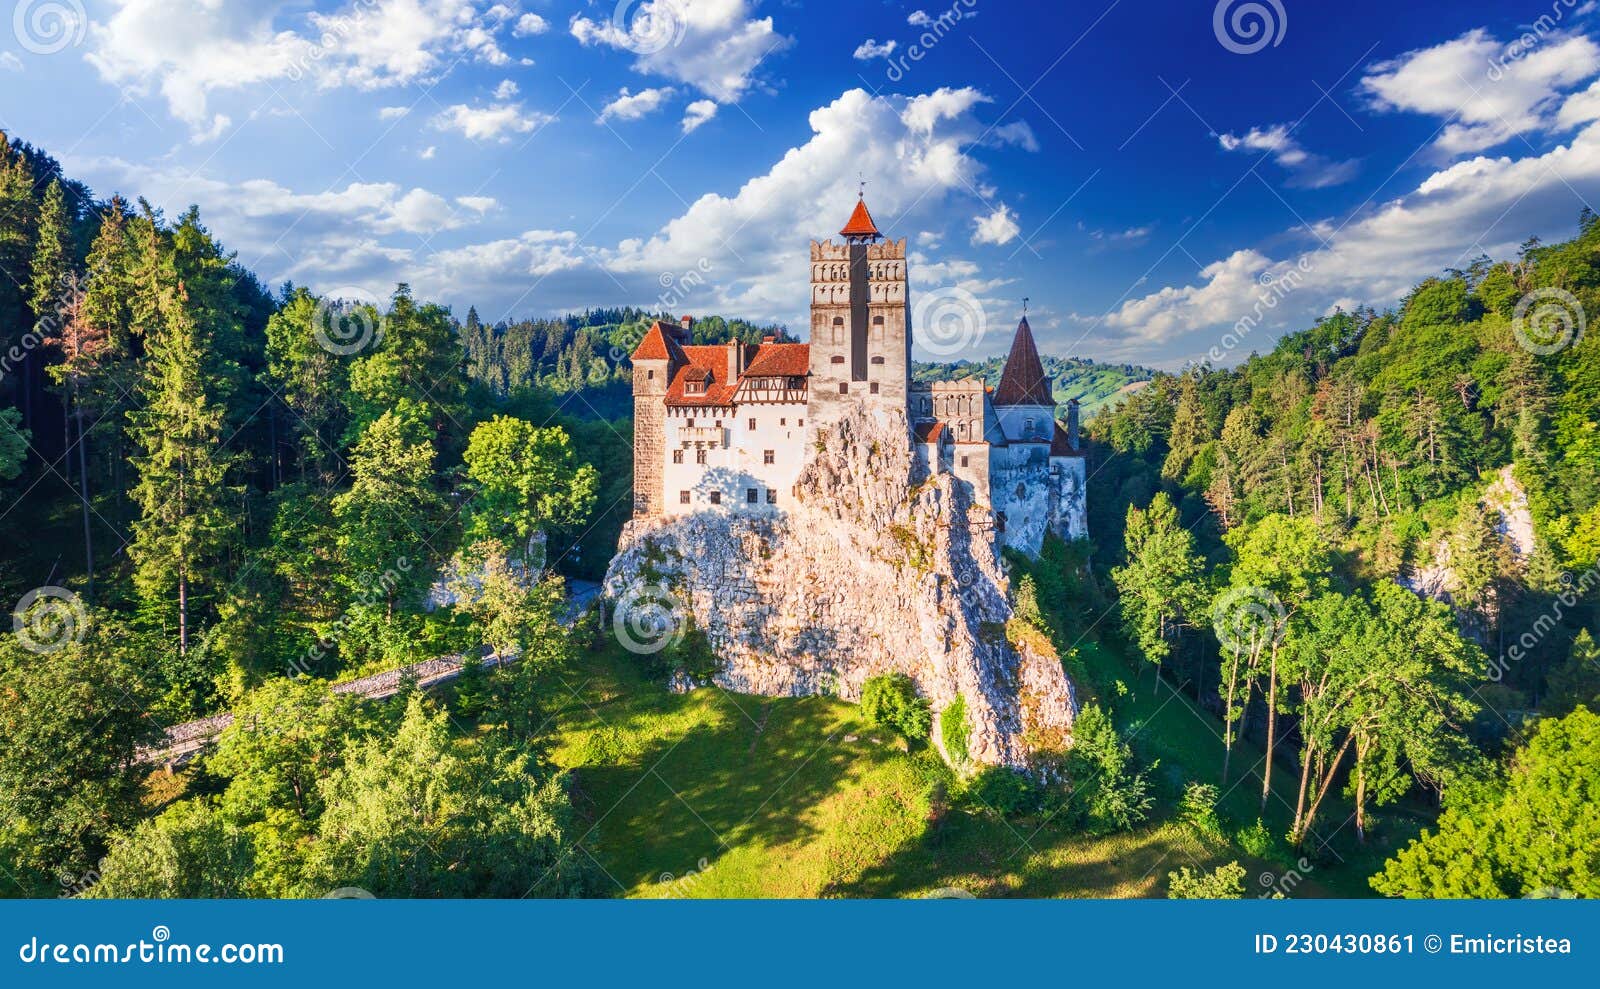 bran castle, transylvania - most famous destination of romania